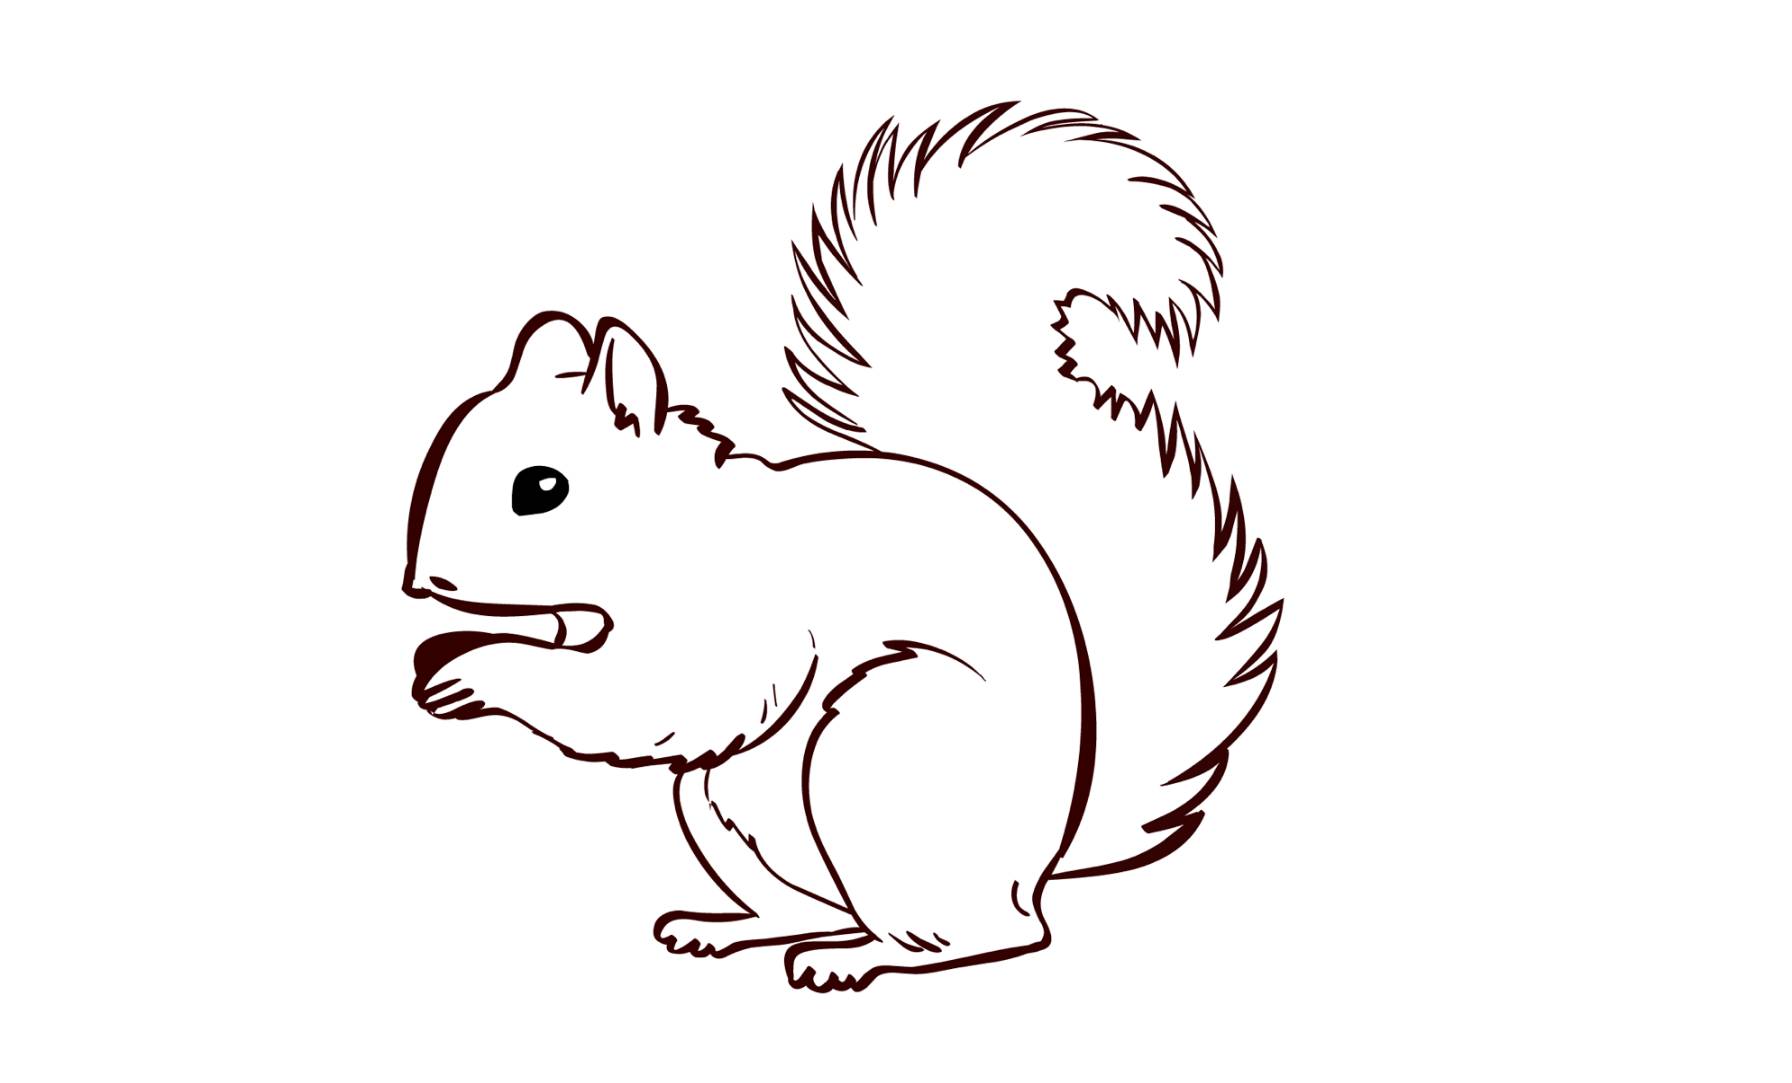 Brave squirrel coloring page